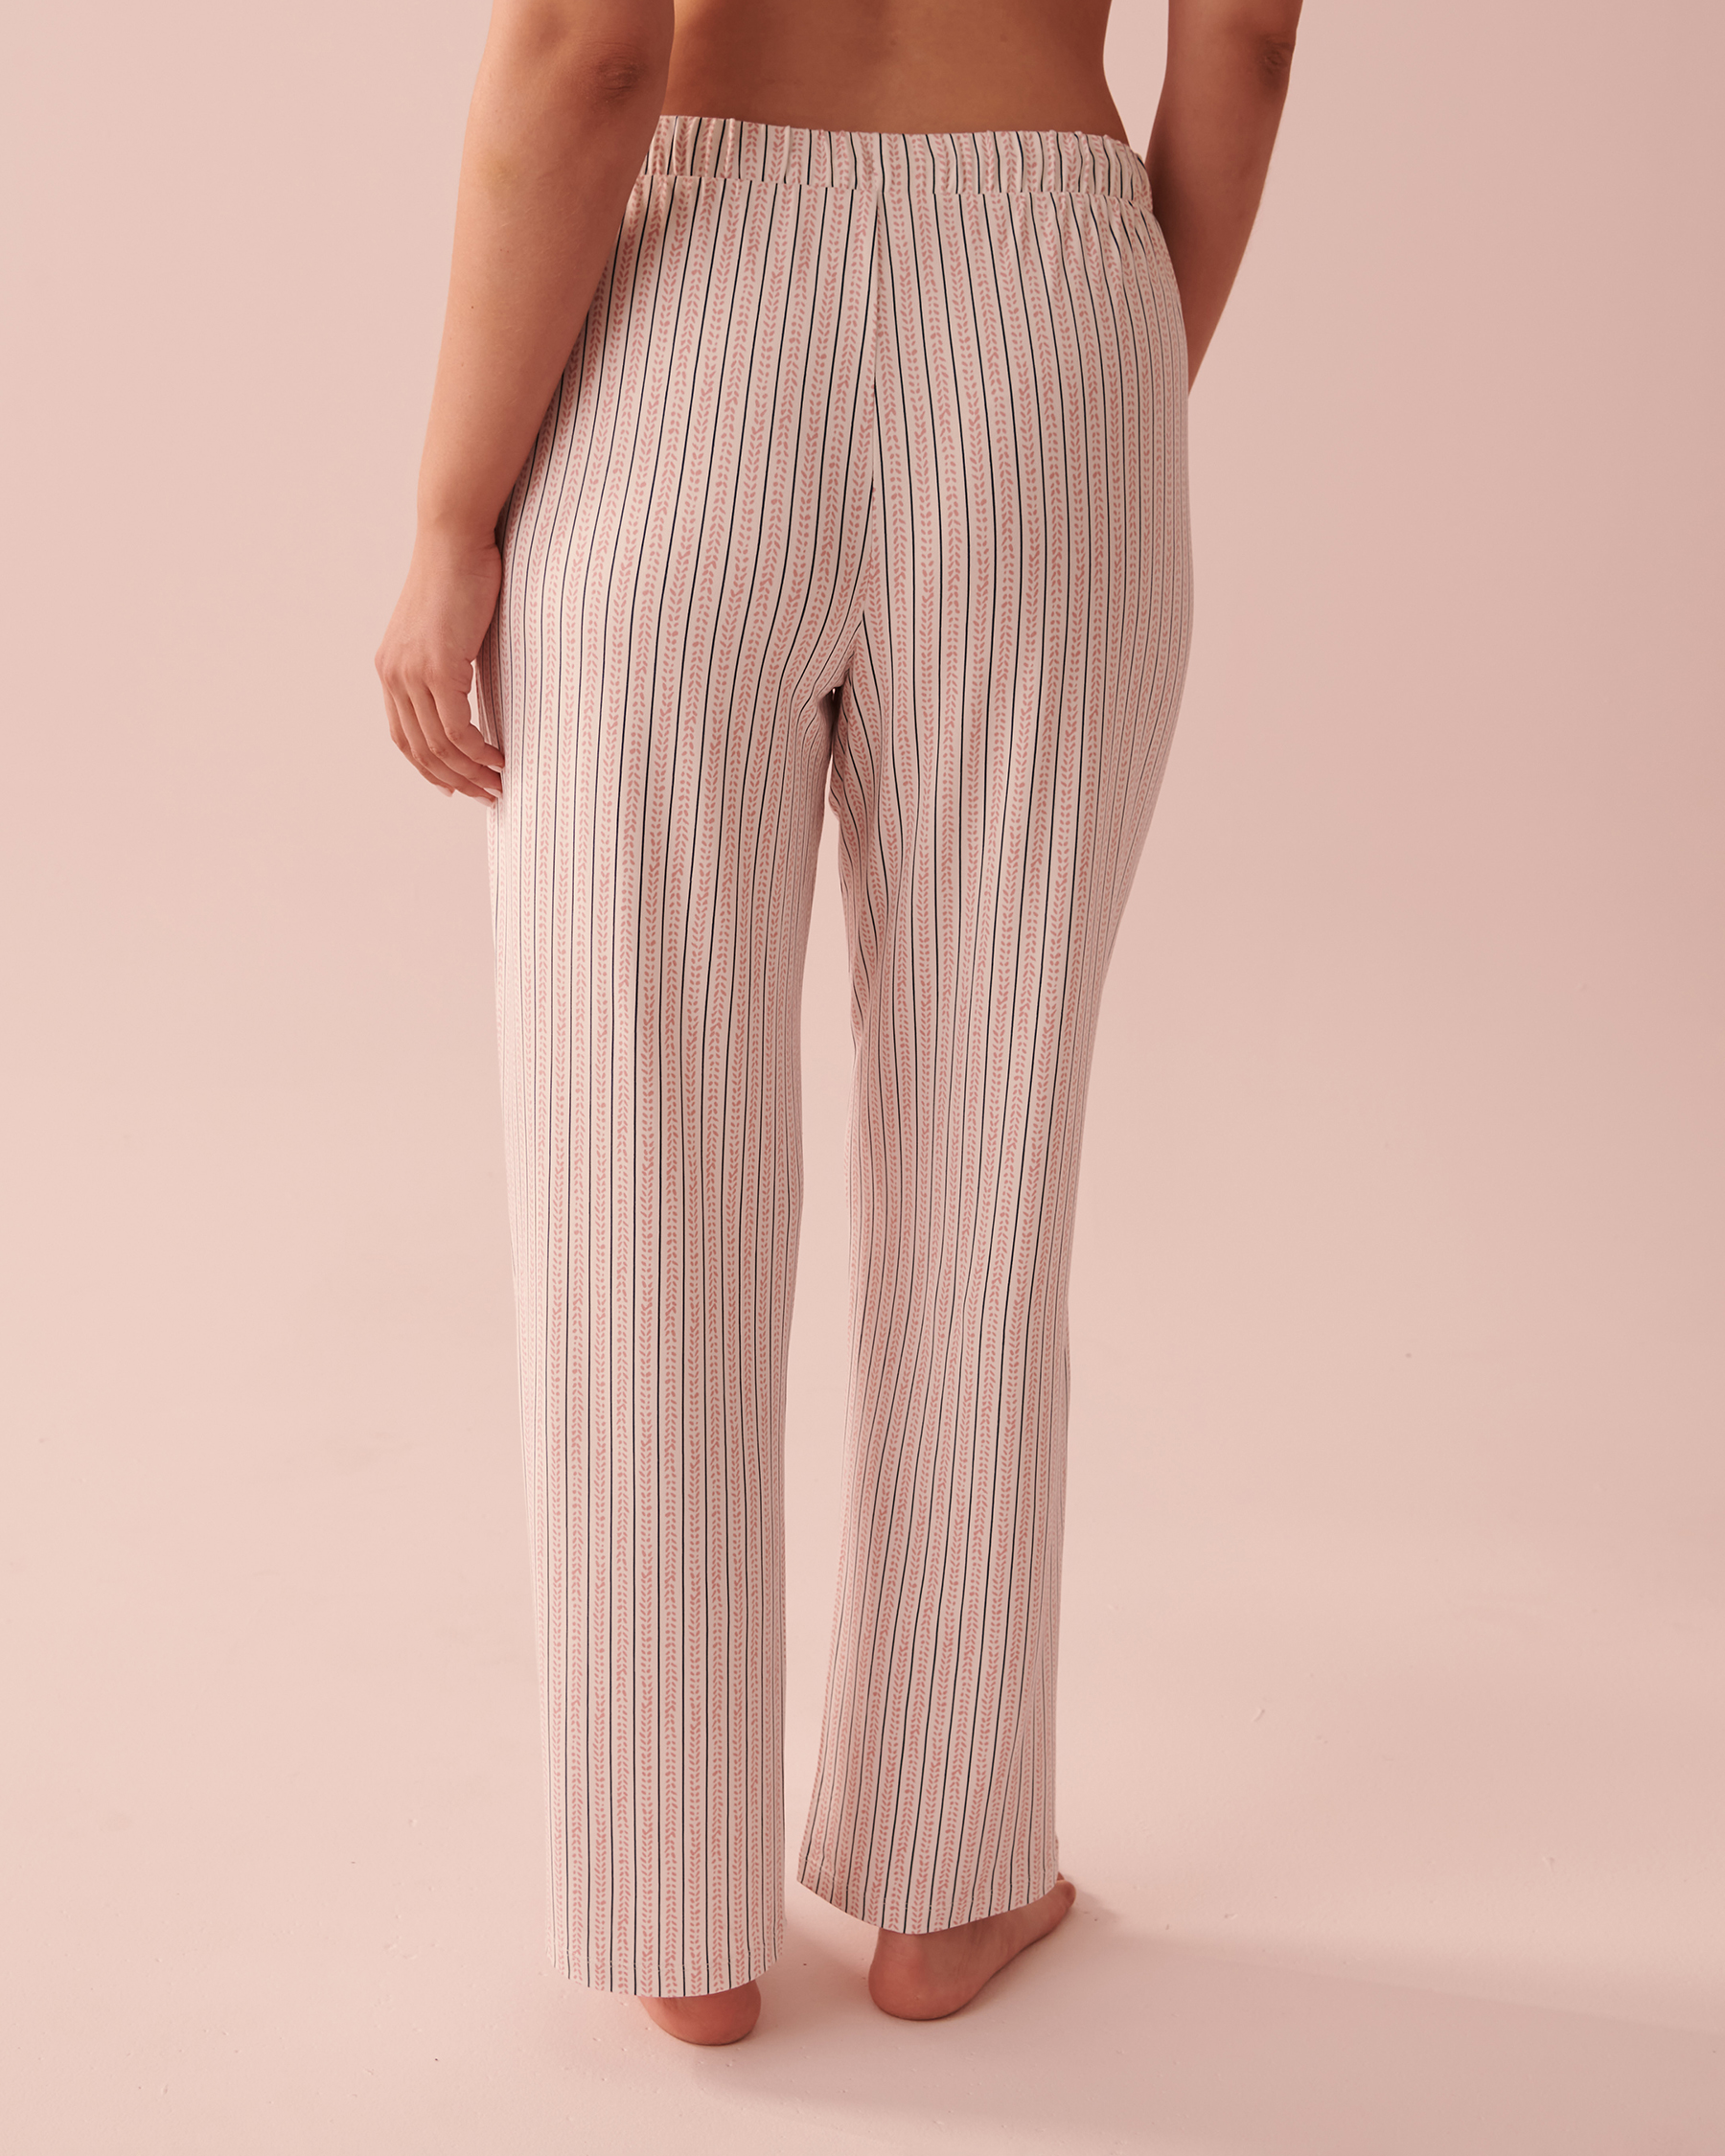 Super Soft Pajama Pants - Colored vertical stripes